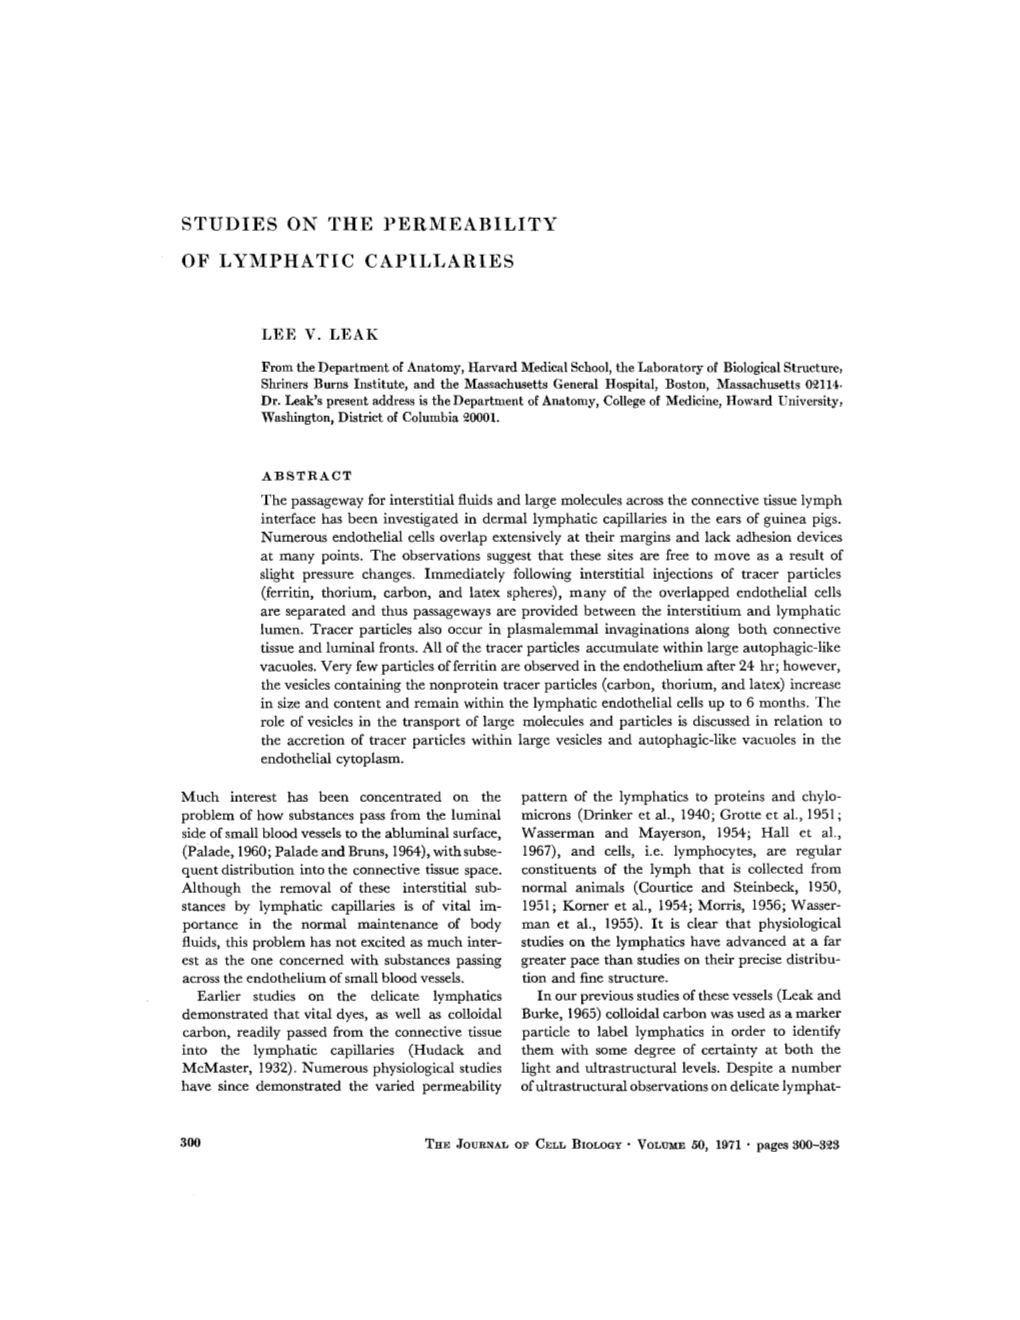 Studies on the Permeability of Lymphatic Capillaries Lee V. Leak